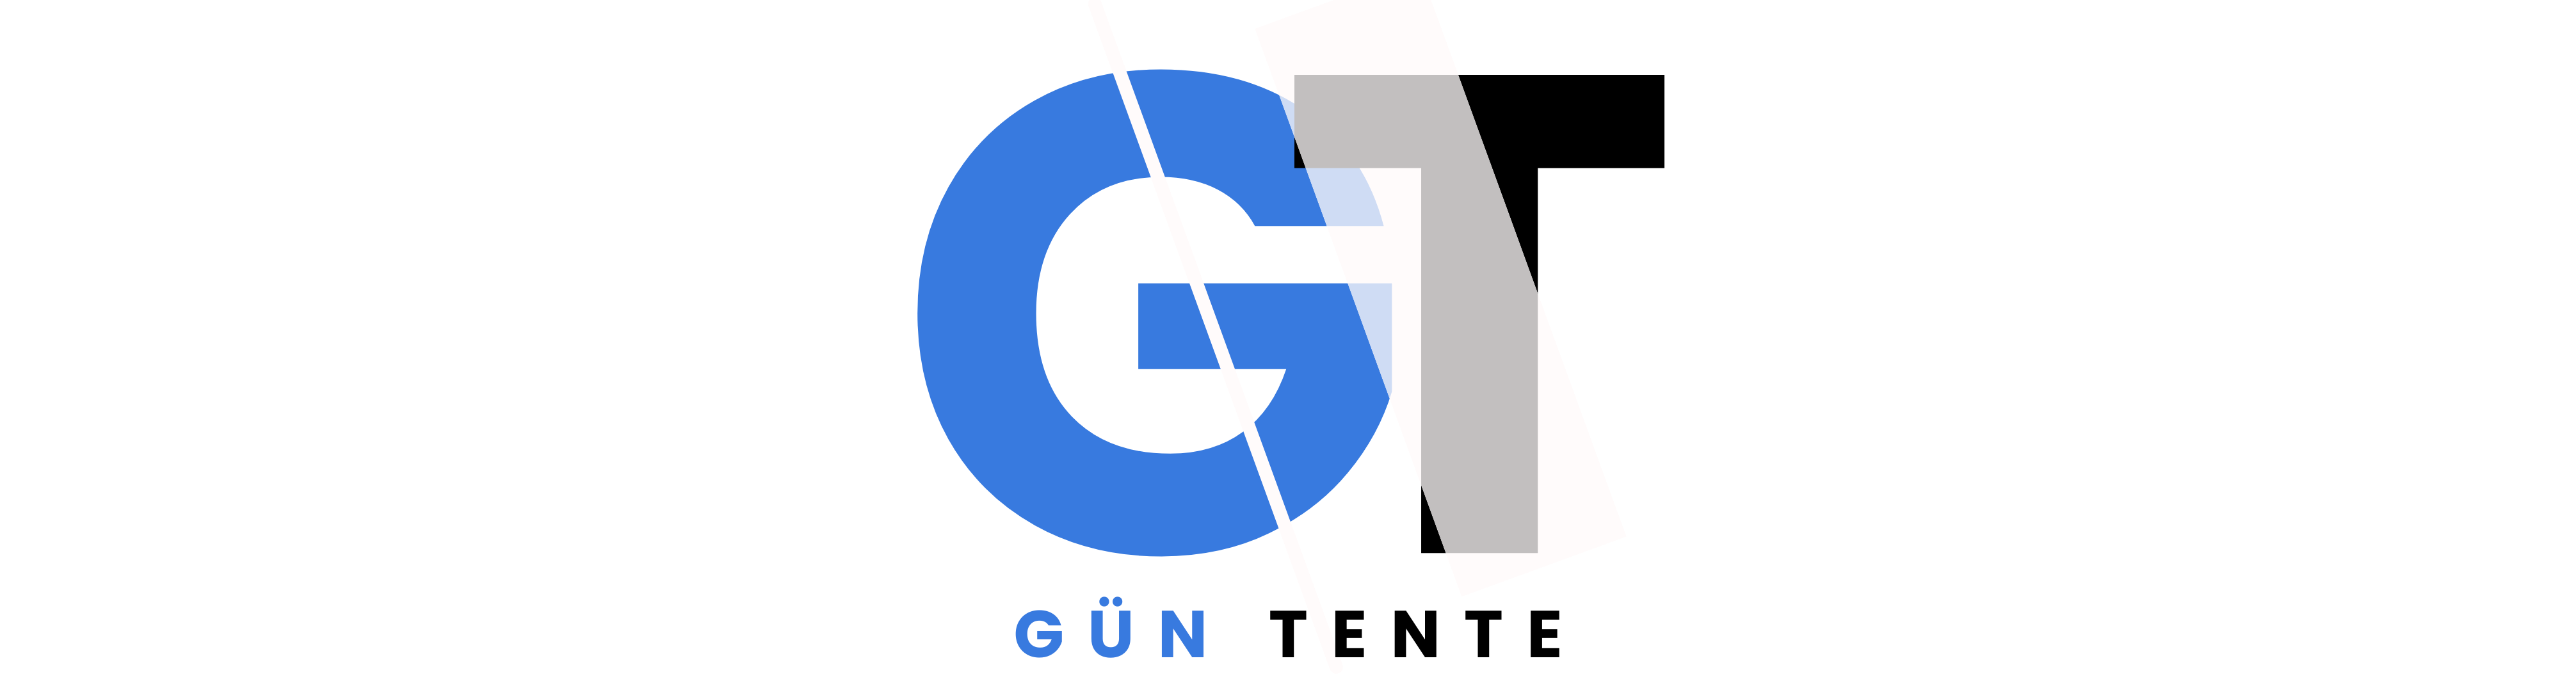 GÜN-TENTE-6